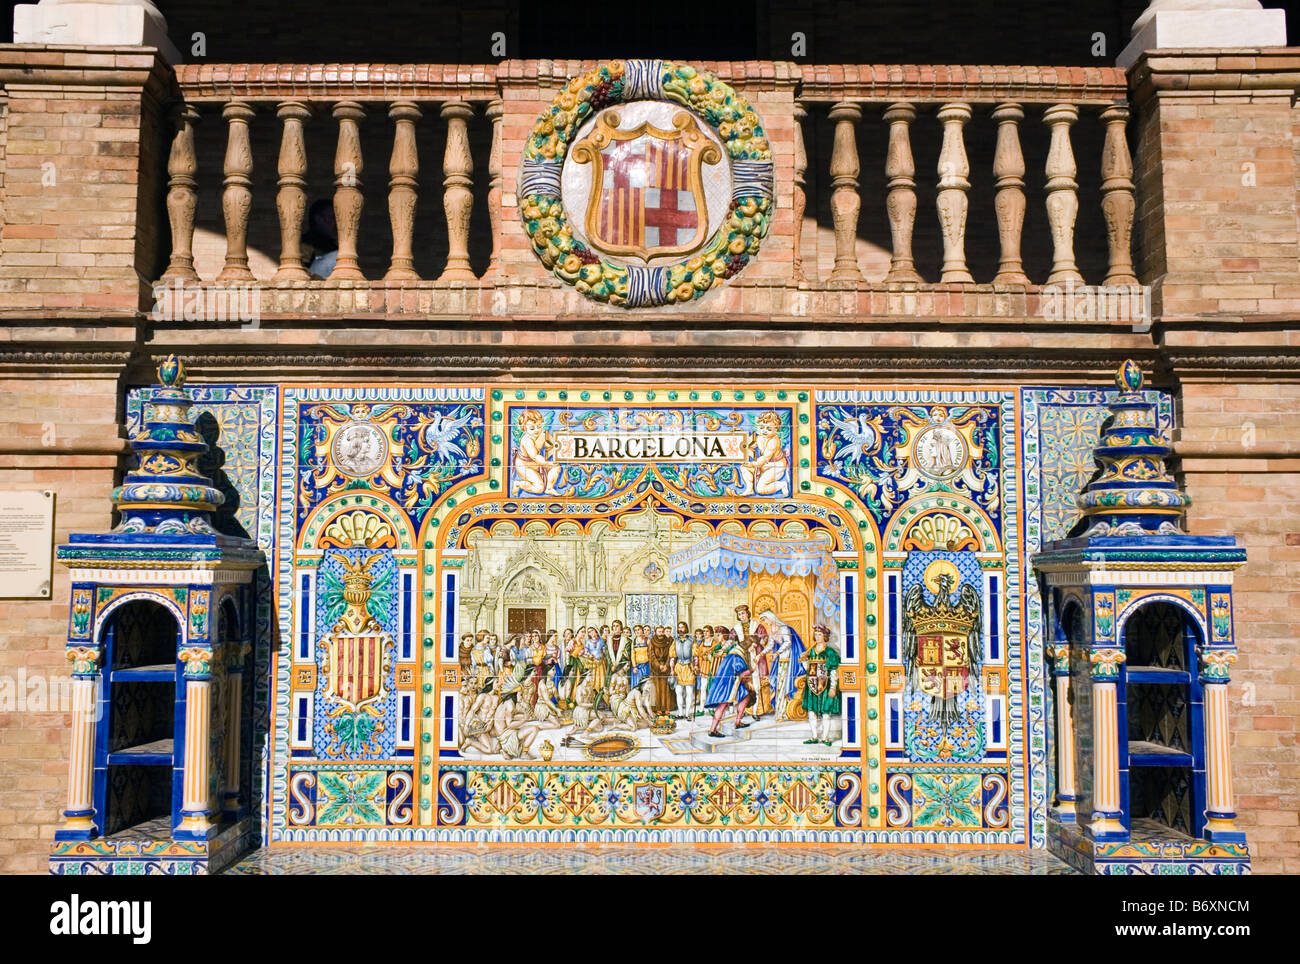 Sevilla, Spanien. Keramikfliesen auf der Plaza de España. Stockfoto